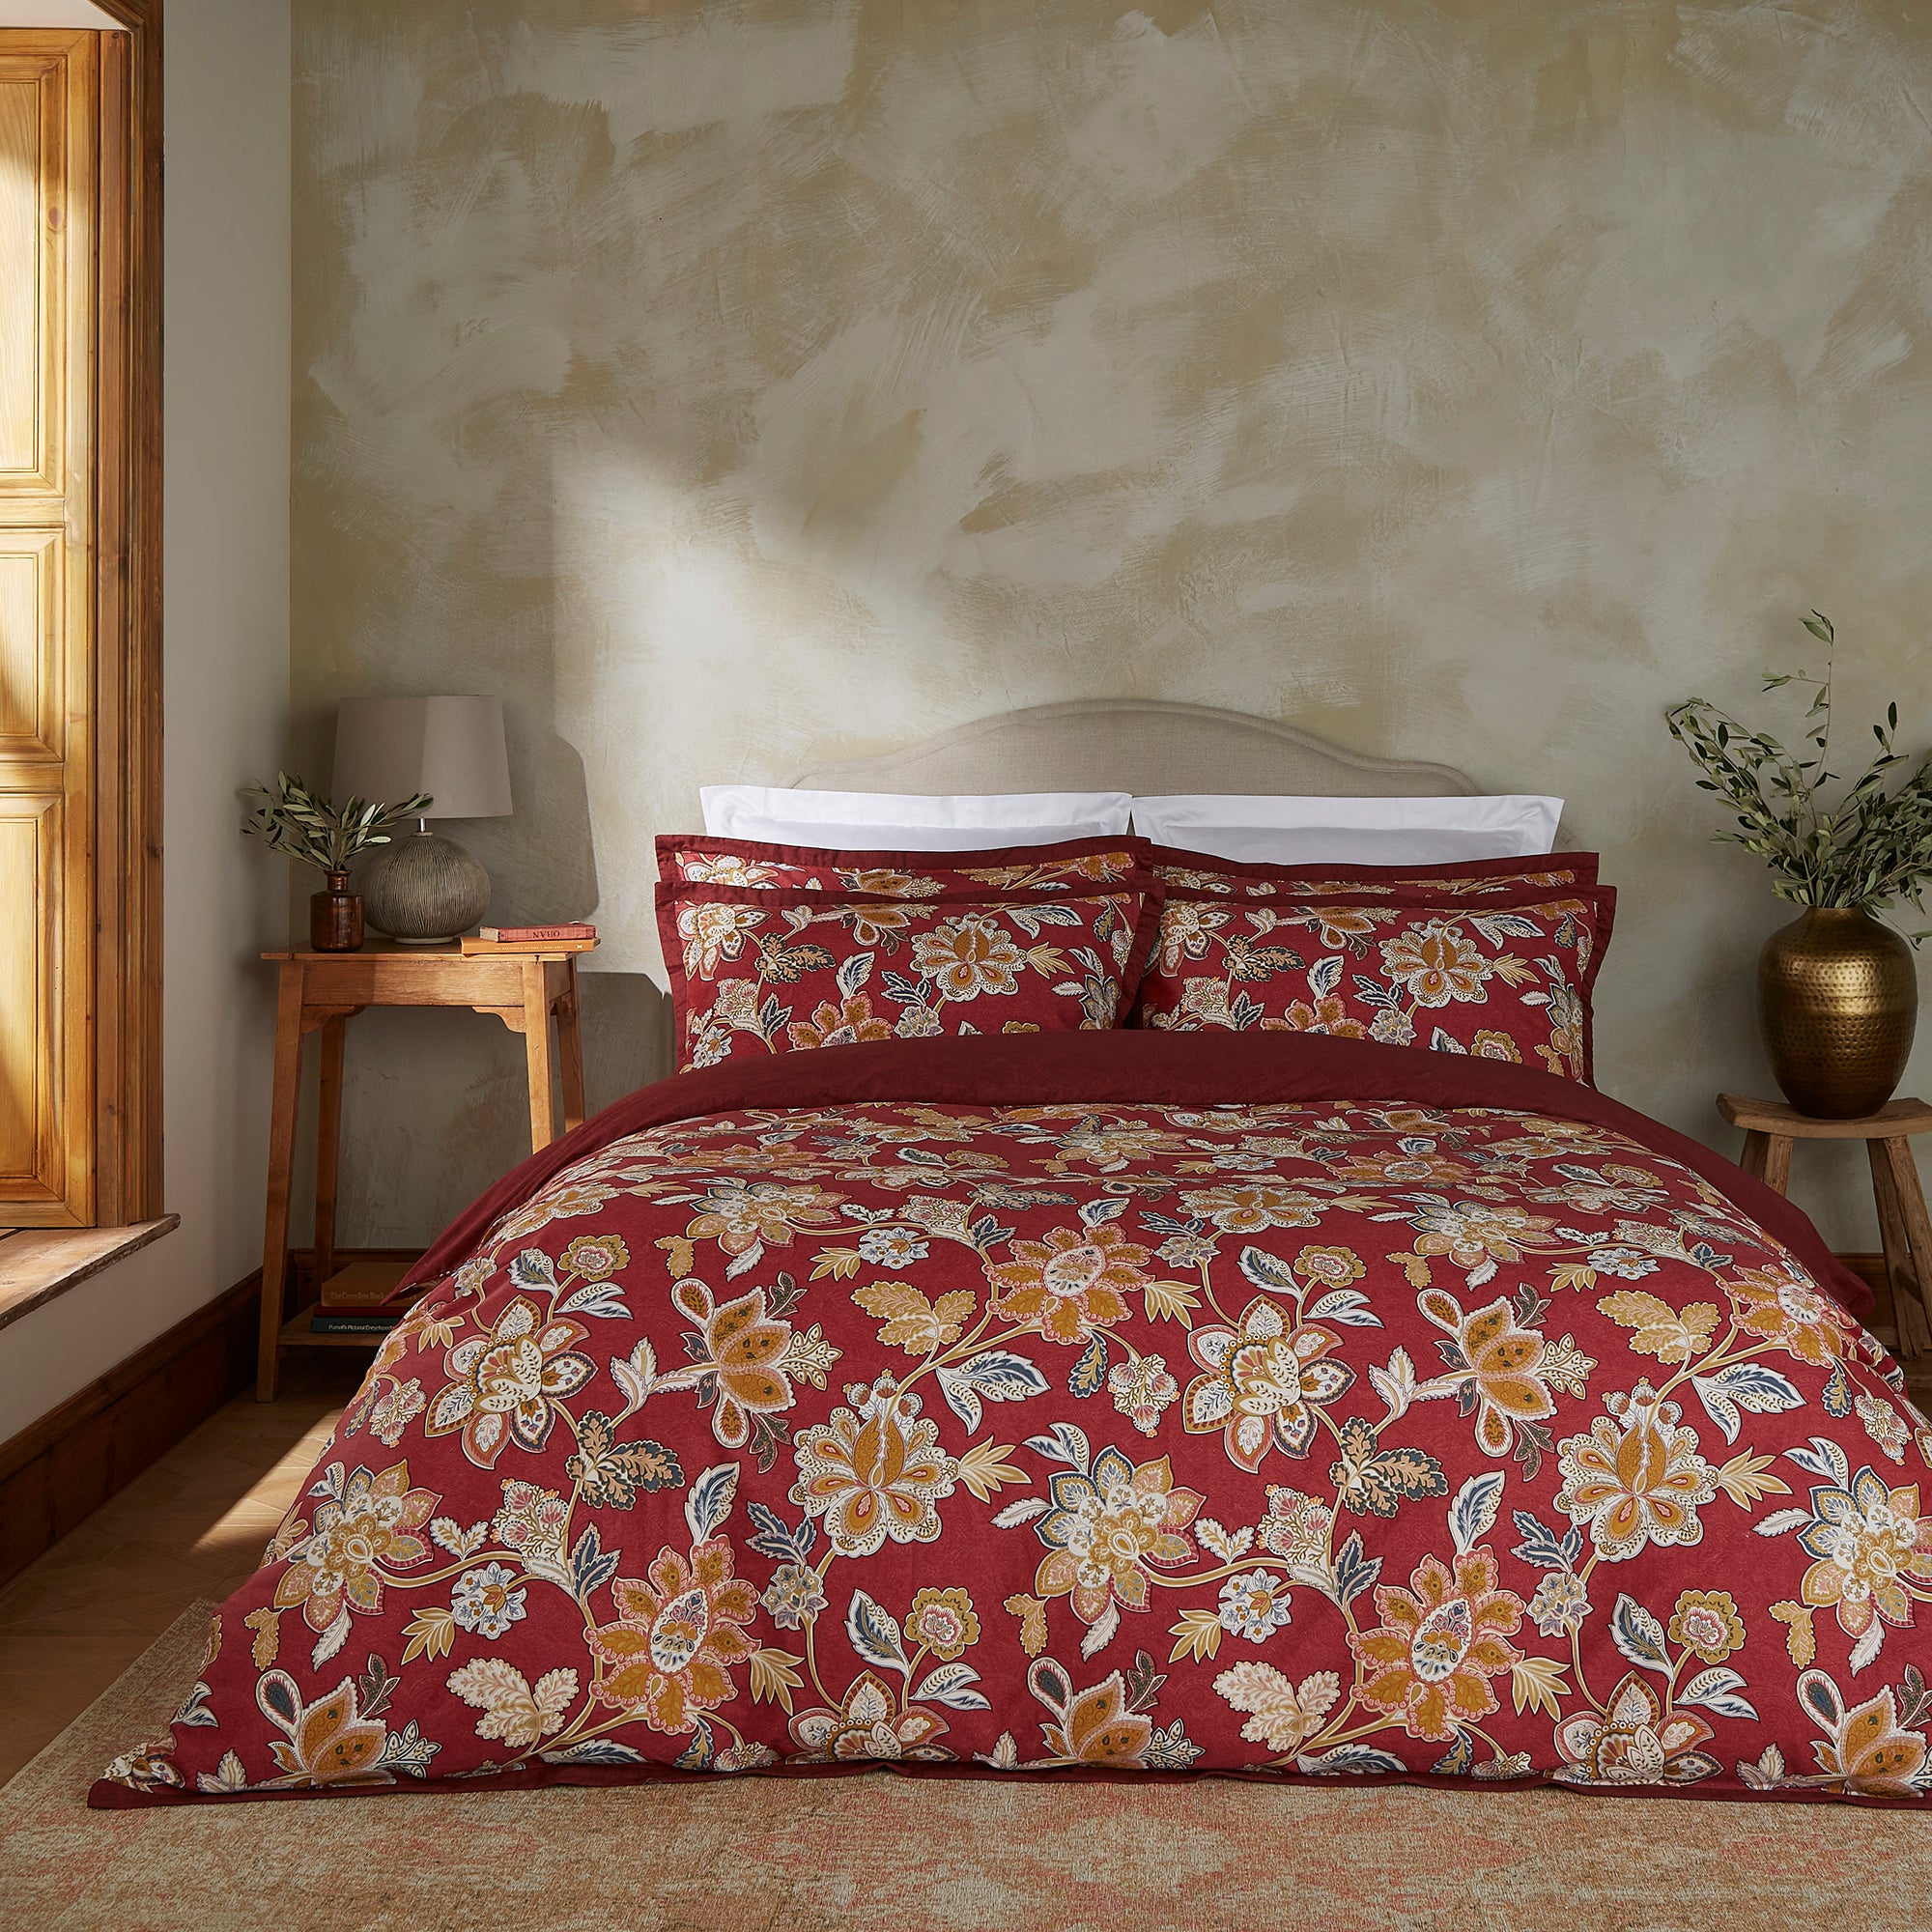 Dorma Samira Saffron Red Cotton Duvet Cover and Pillowcase Set Orange/Red